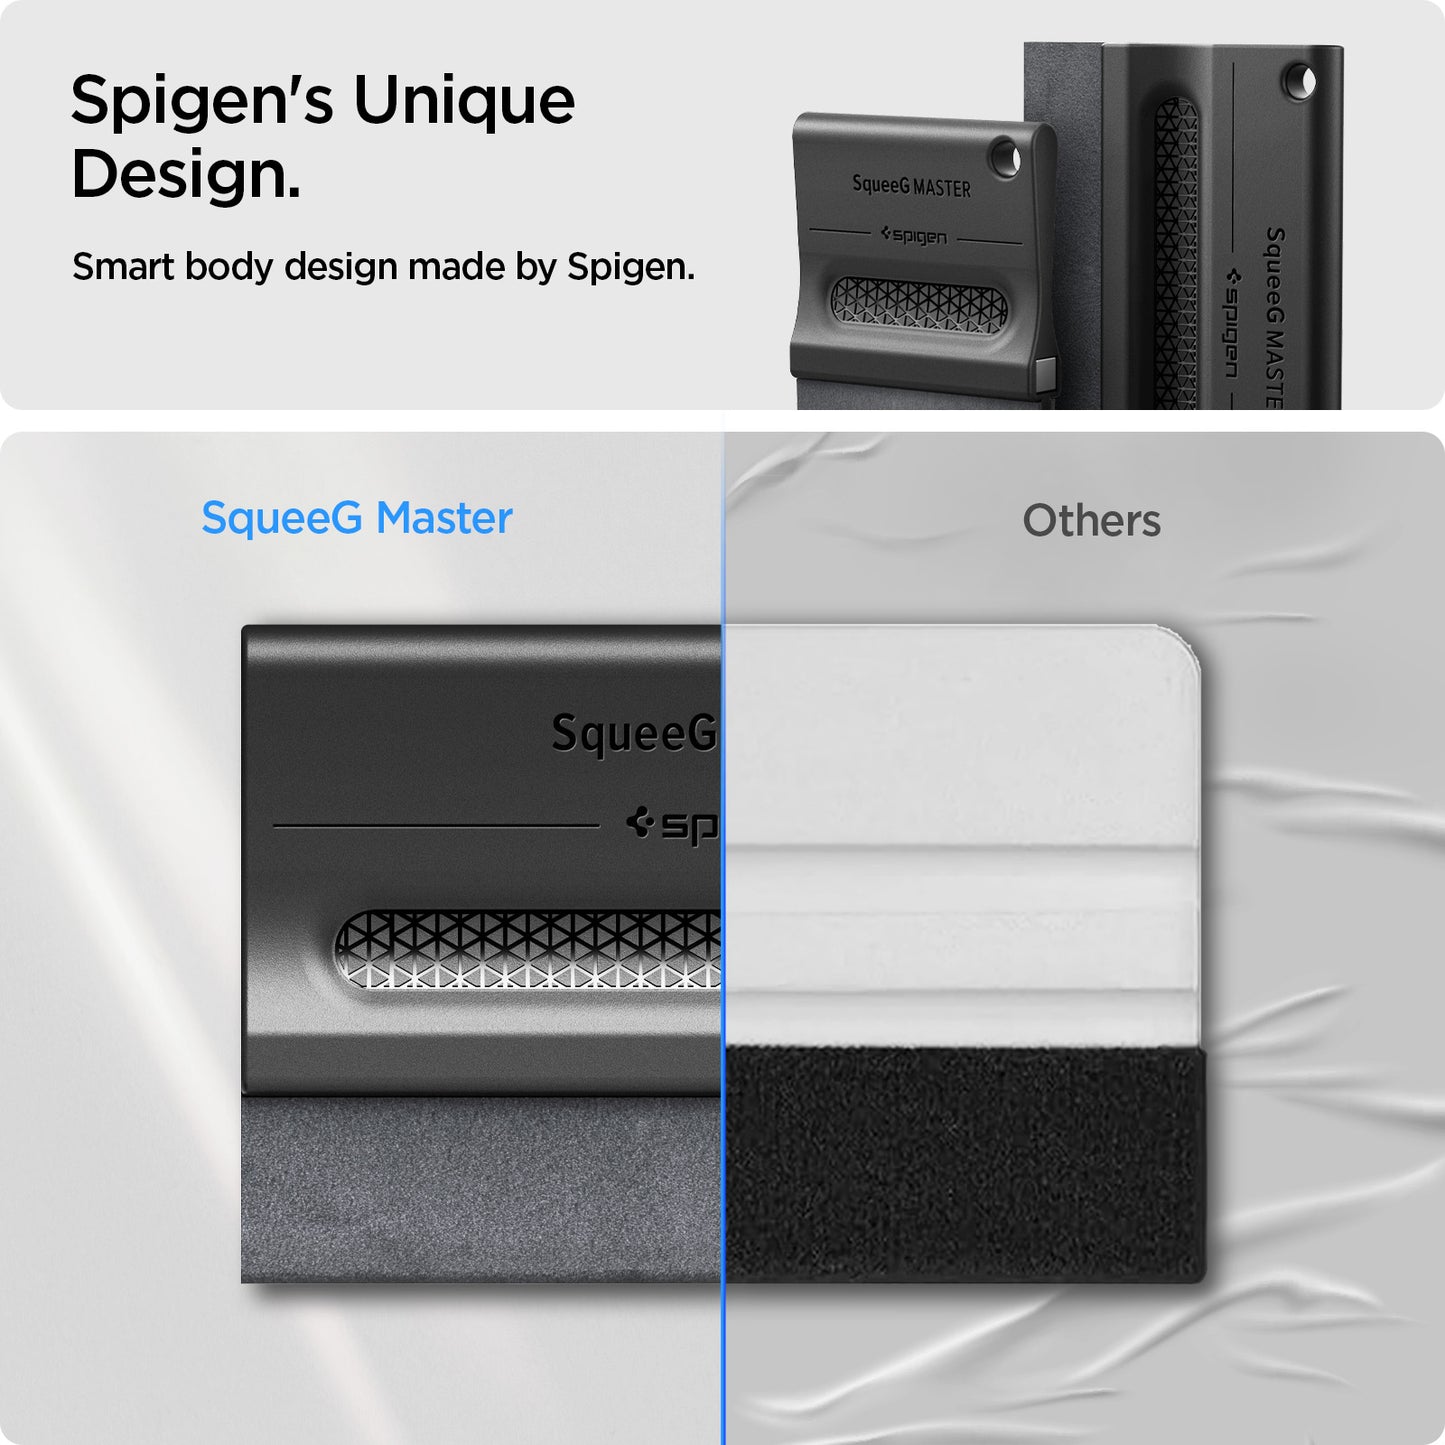 APA06854 - SqueeG Master in black showing Spigen's unique design. Smart body design made by Spigen.